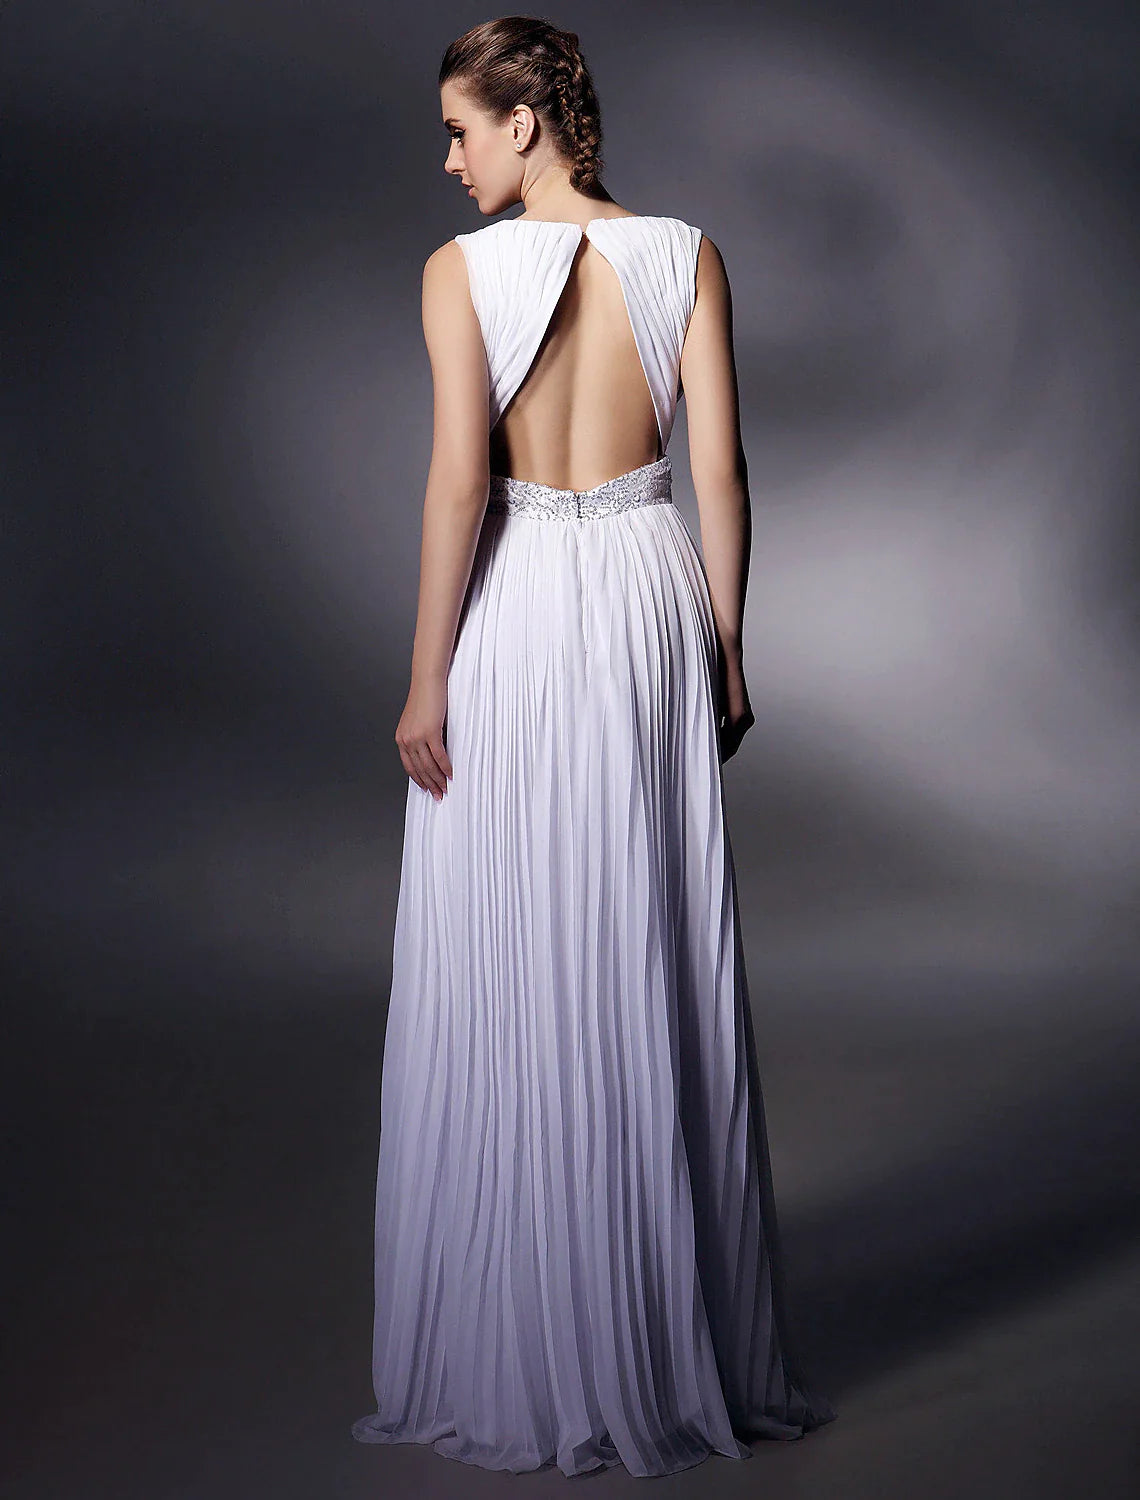 Sheath / Column Celebrity Style Dress Prom Floor Length Sleeveless Plunging Neck Chiffon with Beading Draping